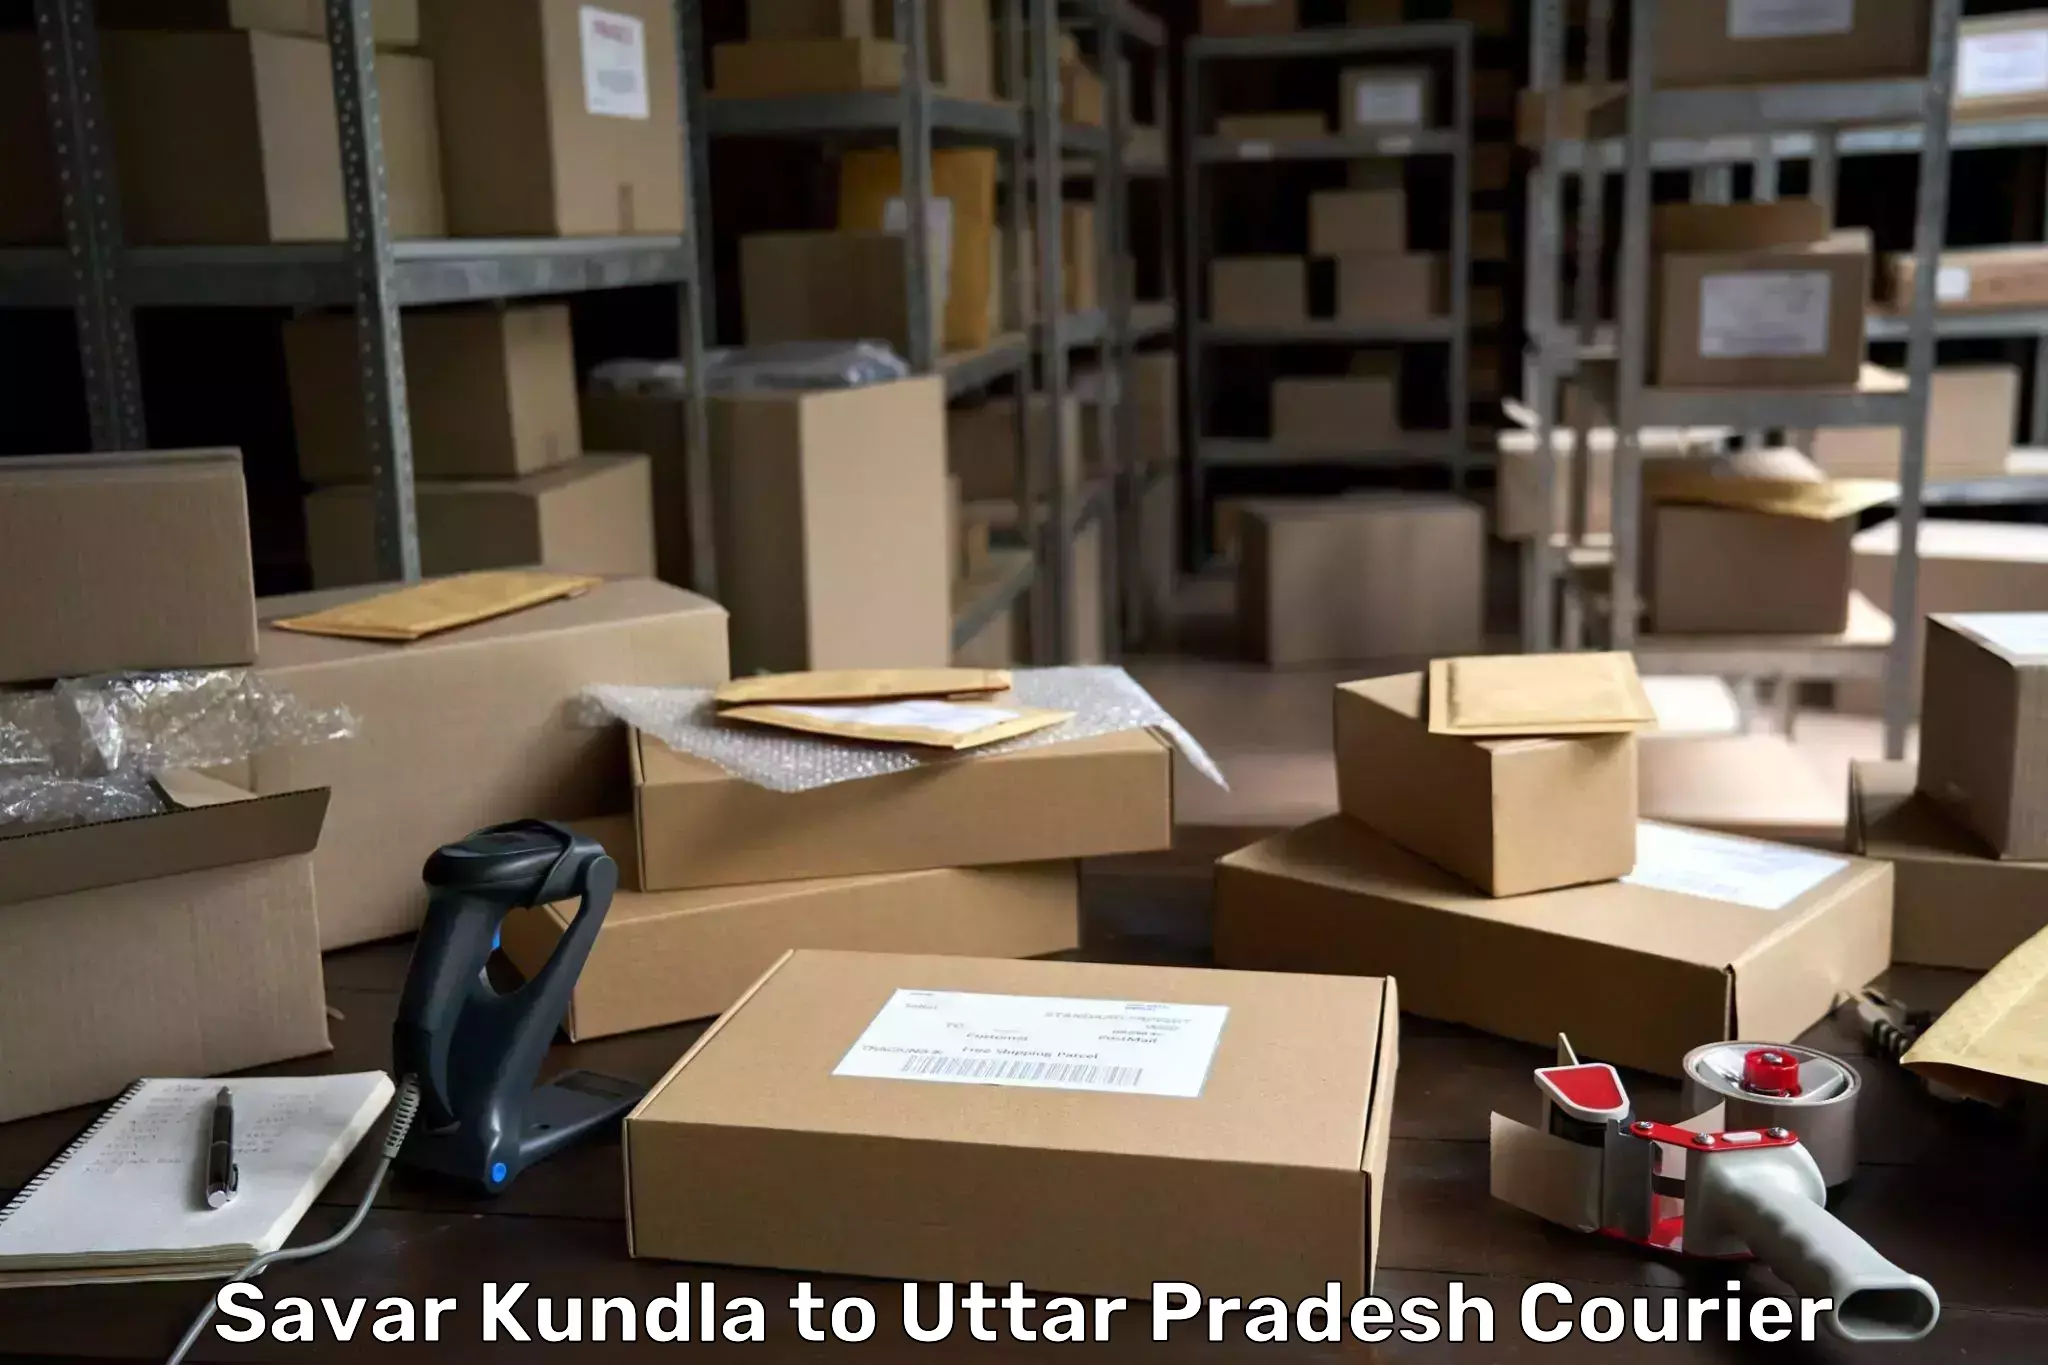 Customizable delivery plans Savar Kundla to Aligarh